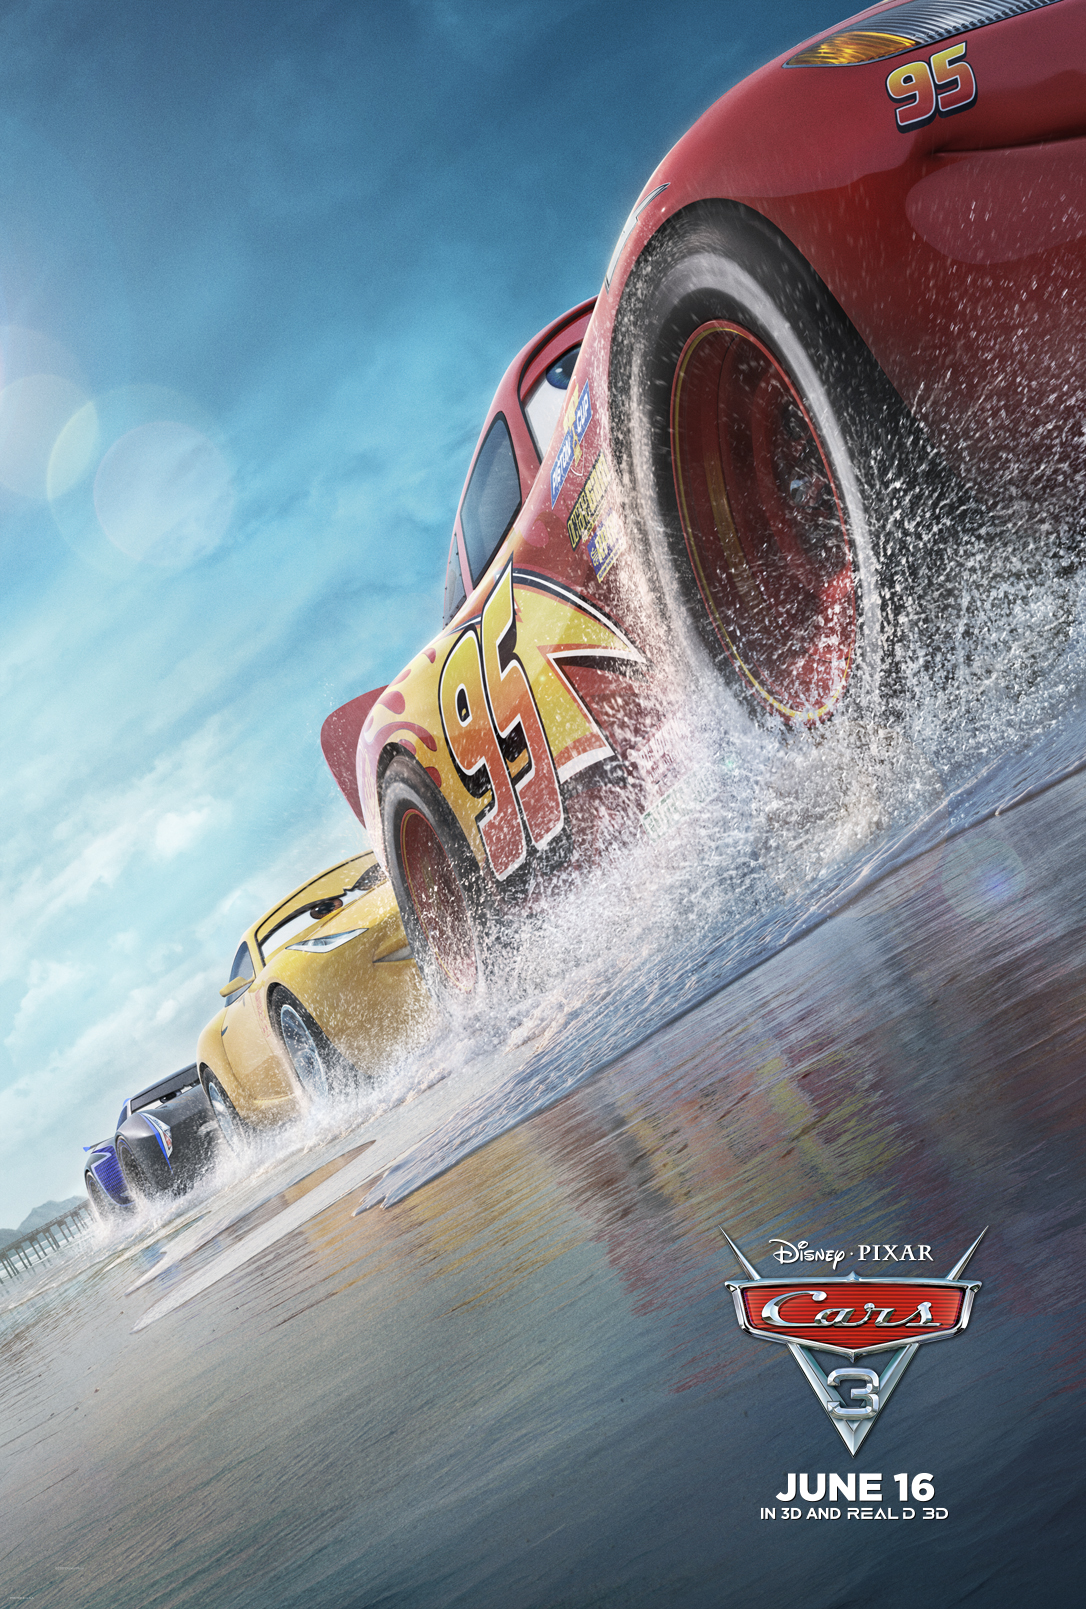 New Details & Photos on Pixar’s Cars 3!